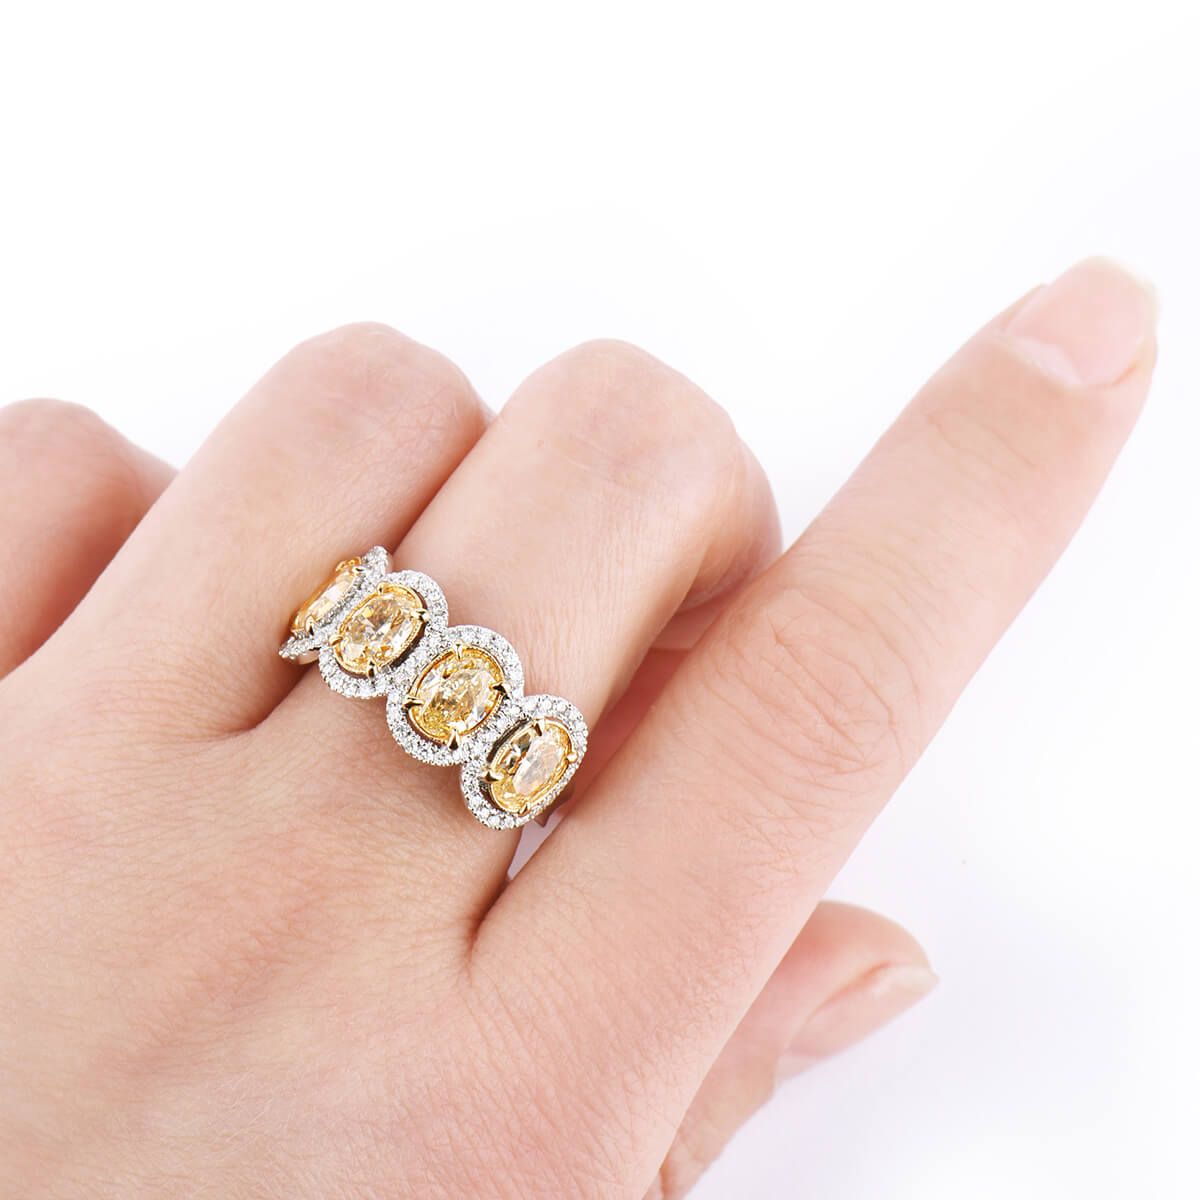 Fancy Intense Yellow Diamond Ring, 2.89 Ct. TW, Oval shape, EG_Lab Certified, J5826065335